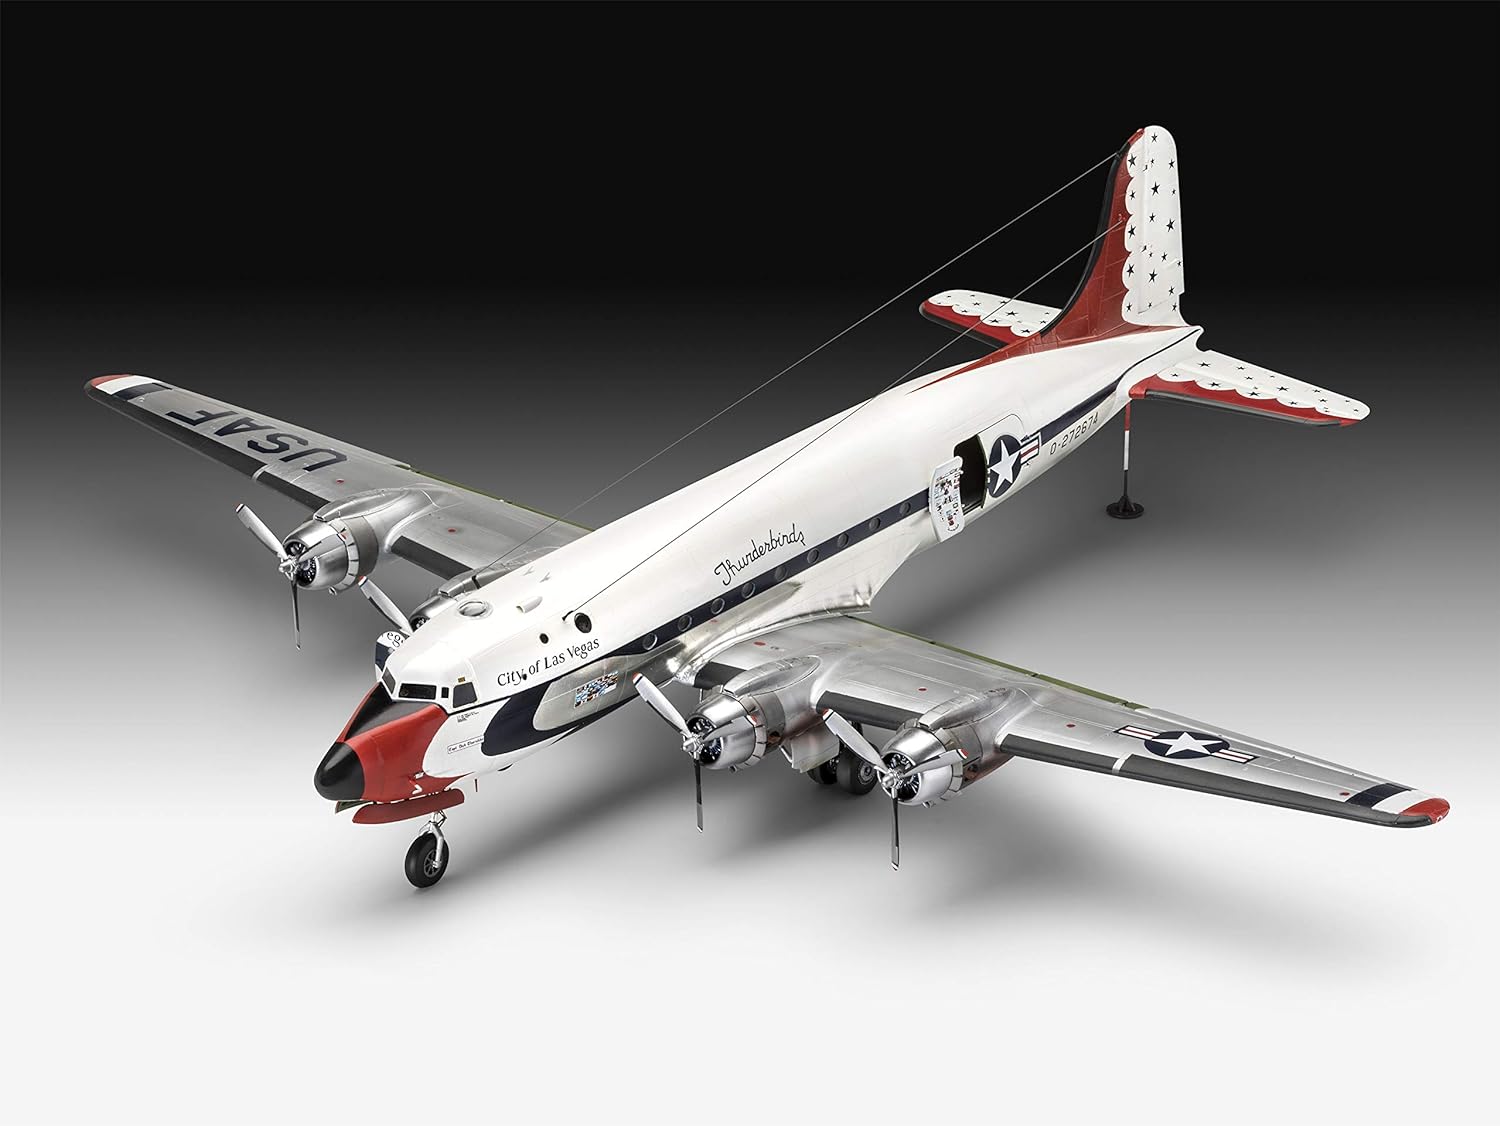 Douglas C-54D Thunderbirds Platinum 1:72 Scale Kit